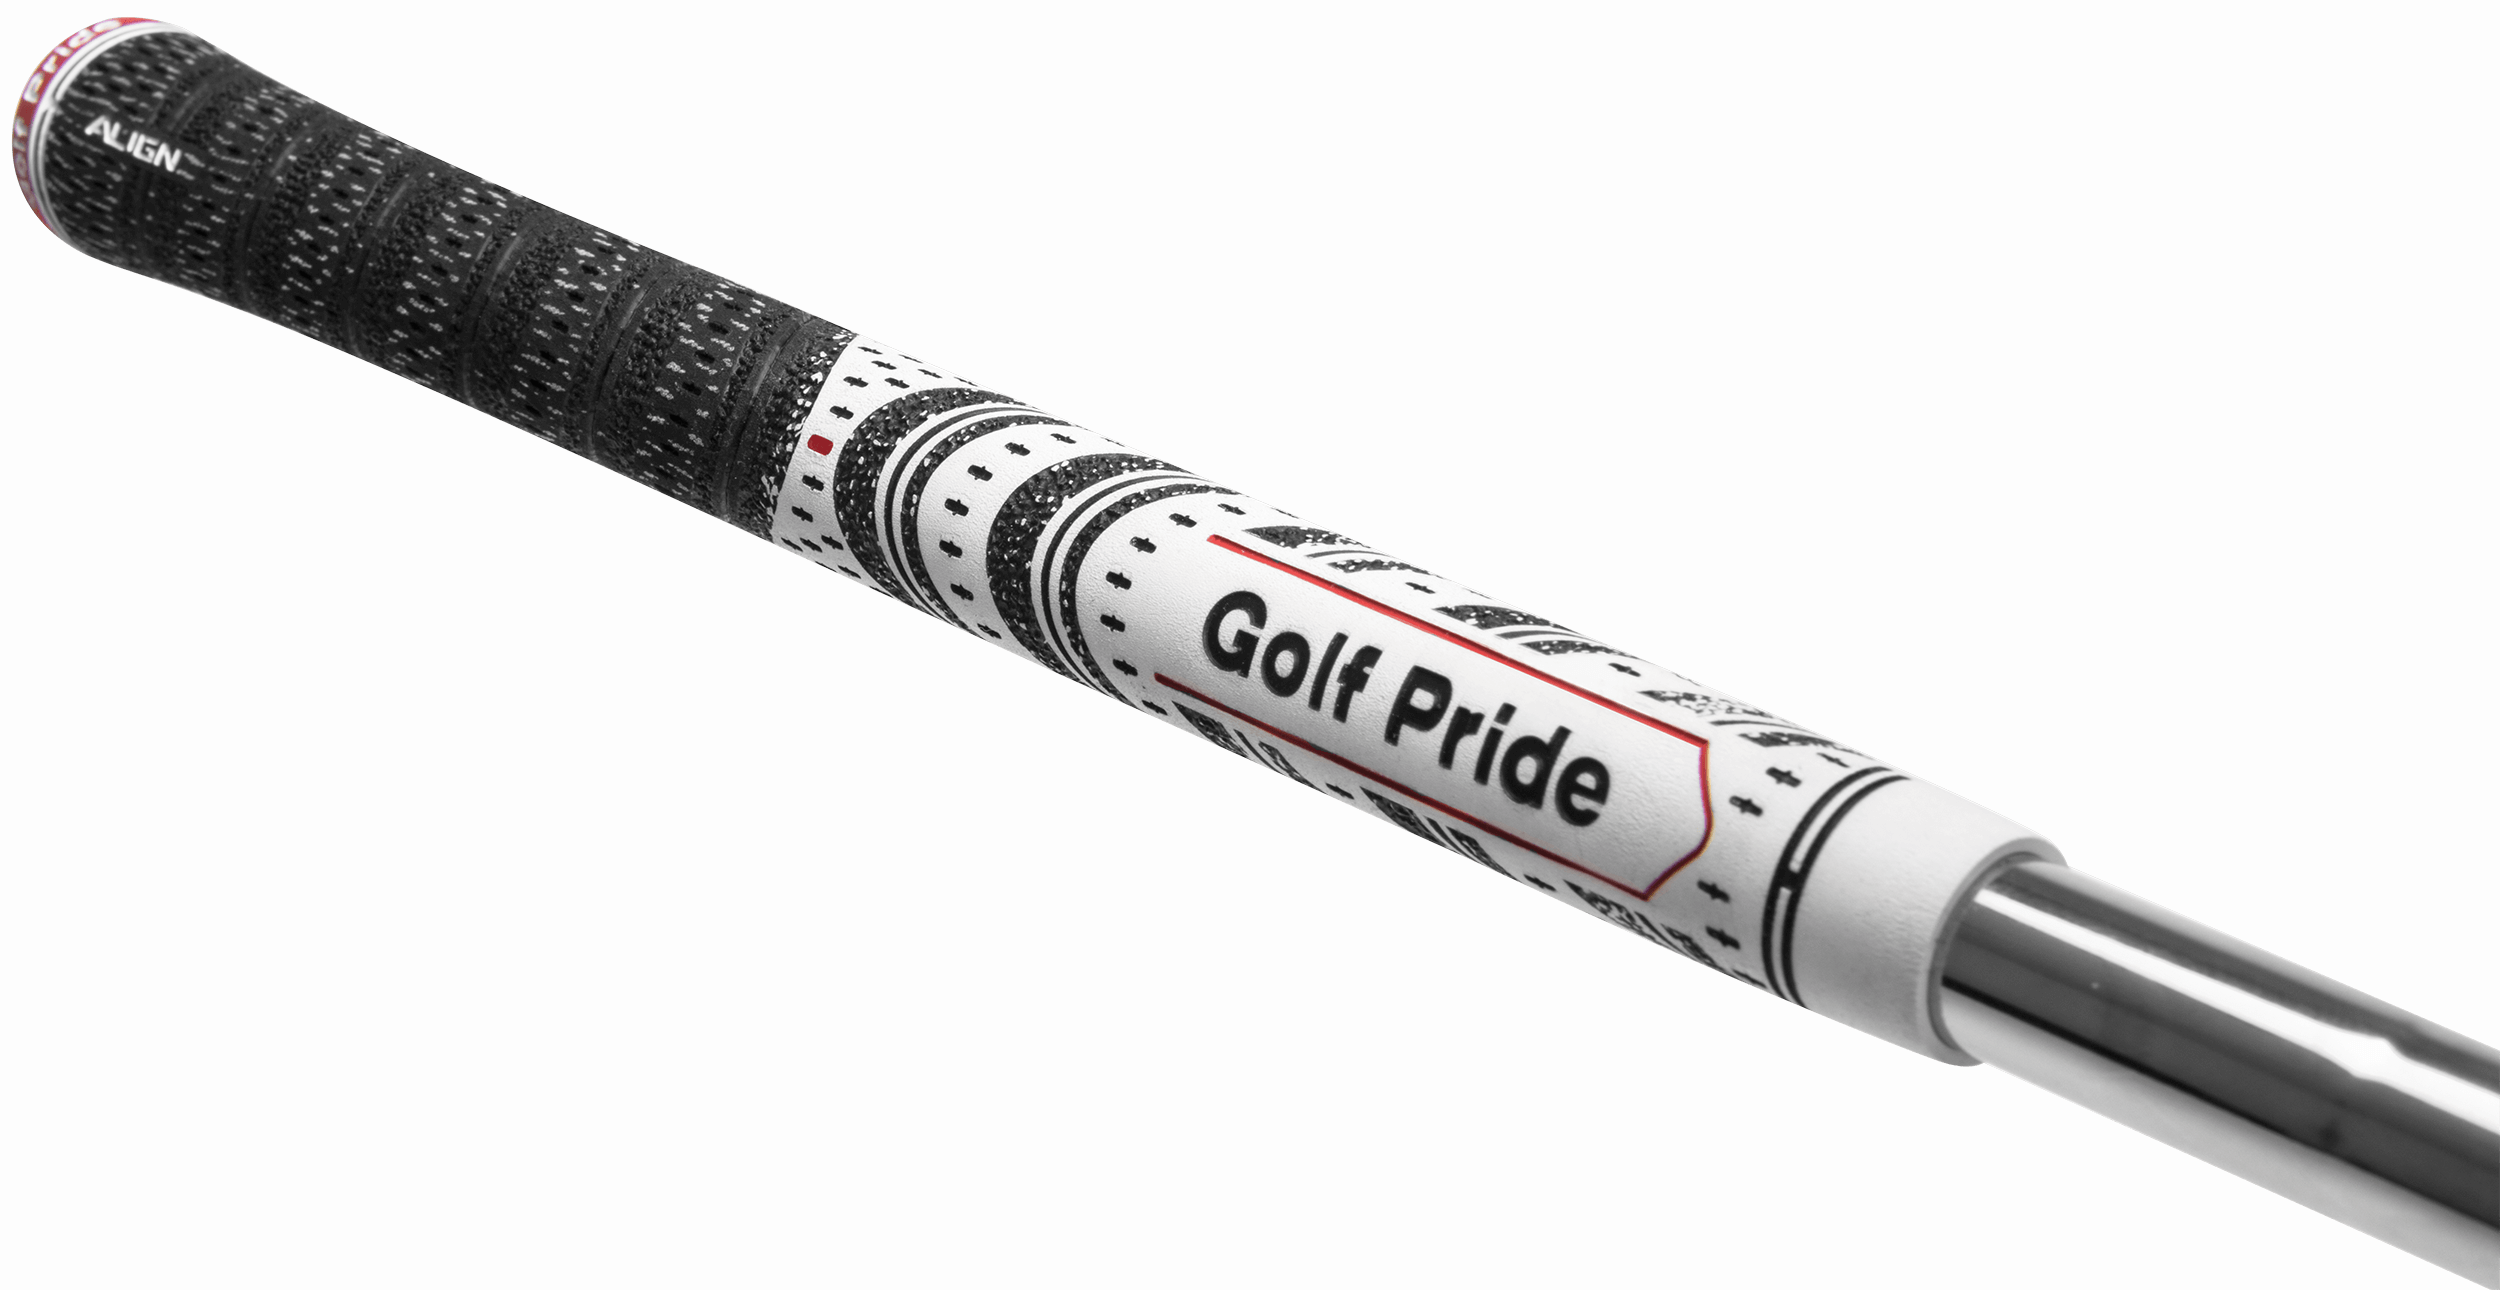 Golf Pride unveils 'reminder' grip with Align technology